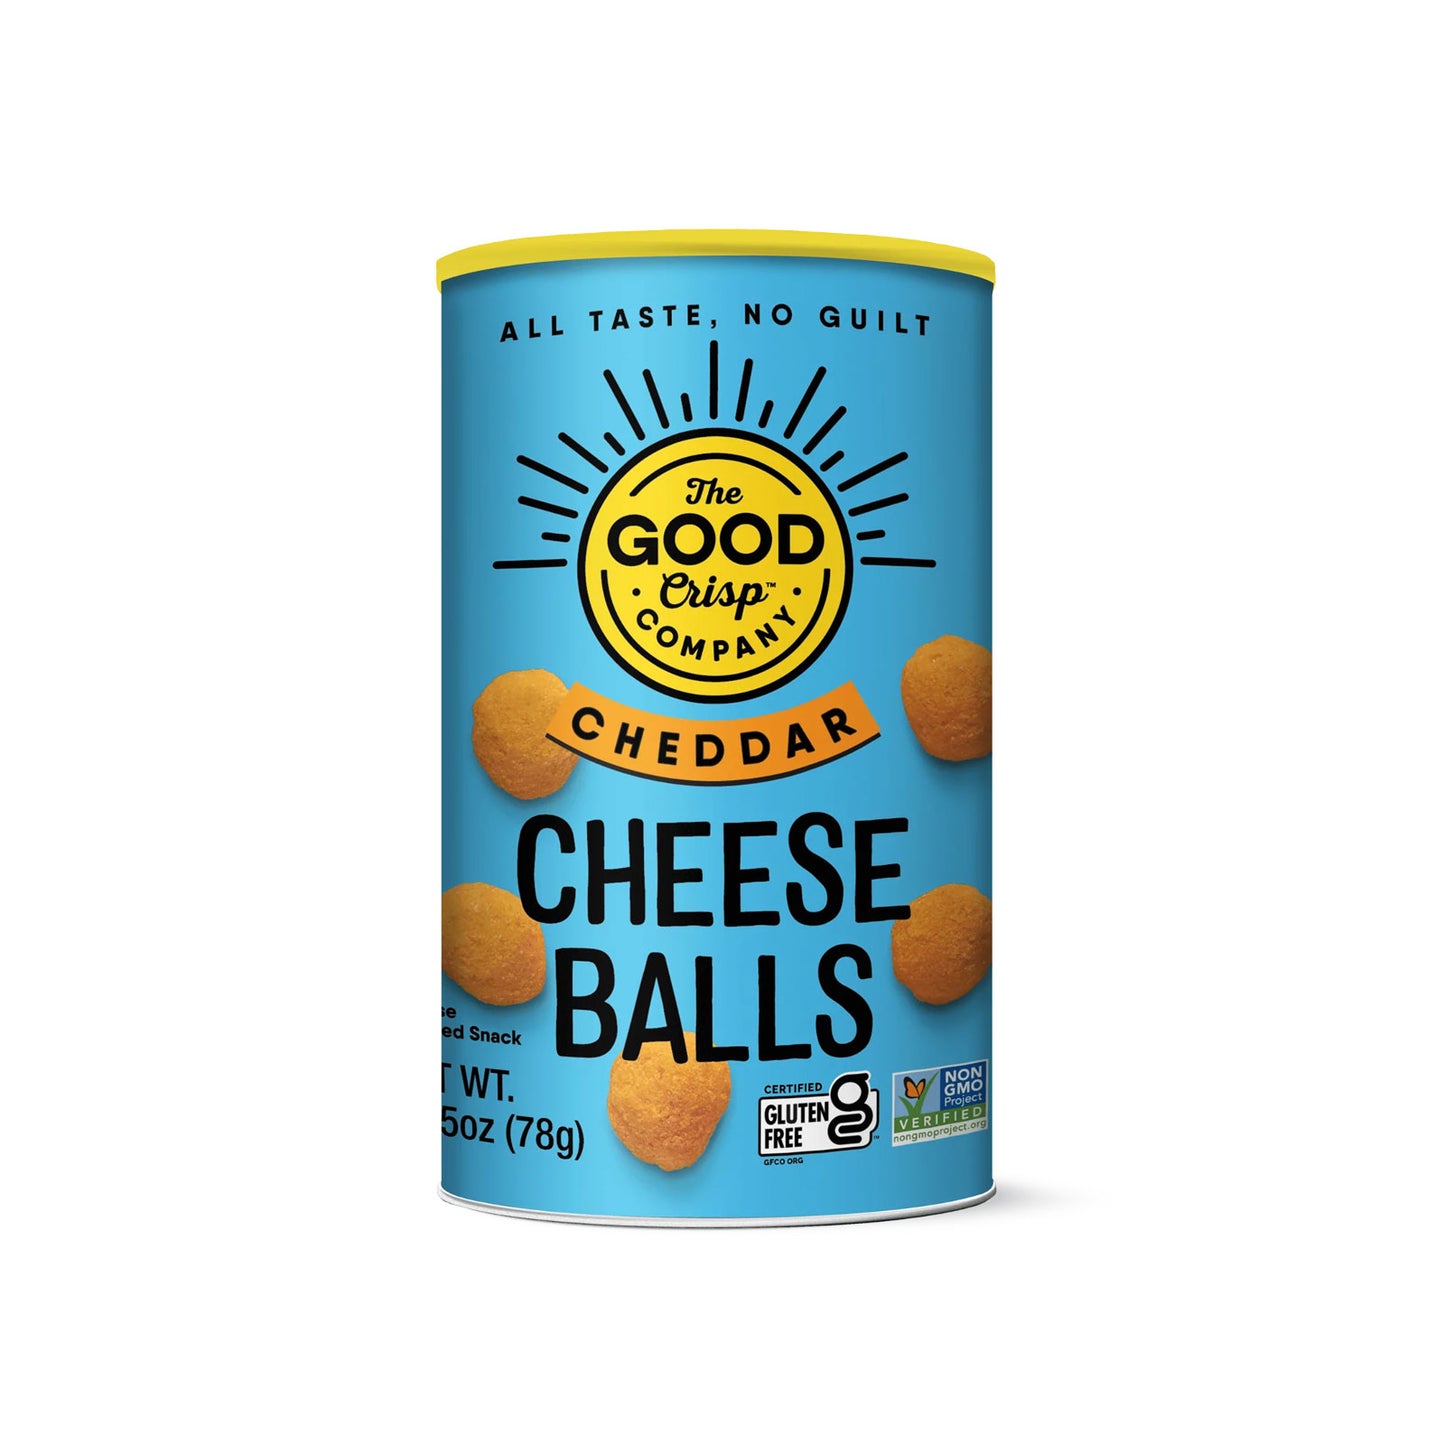 The Good Crisp Cheddar Cheese Balls